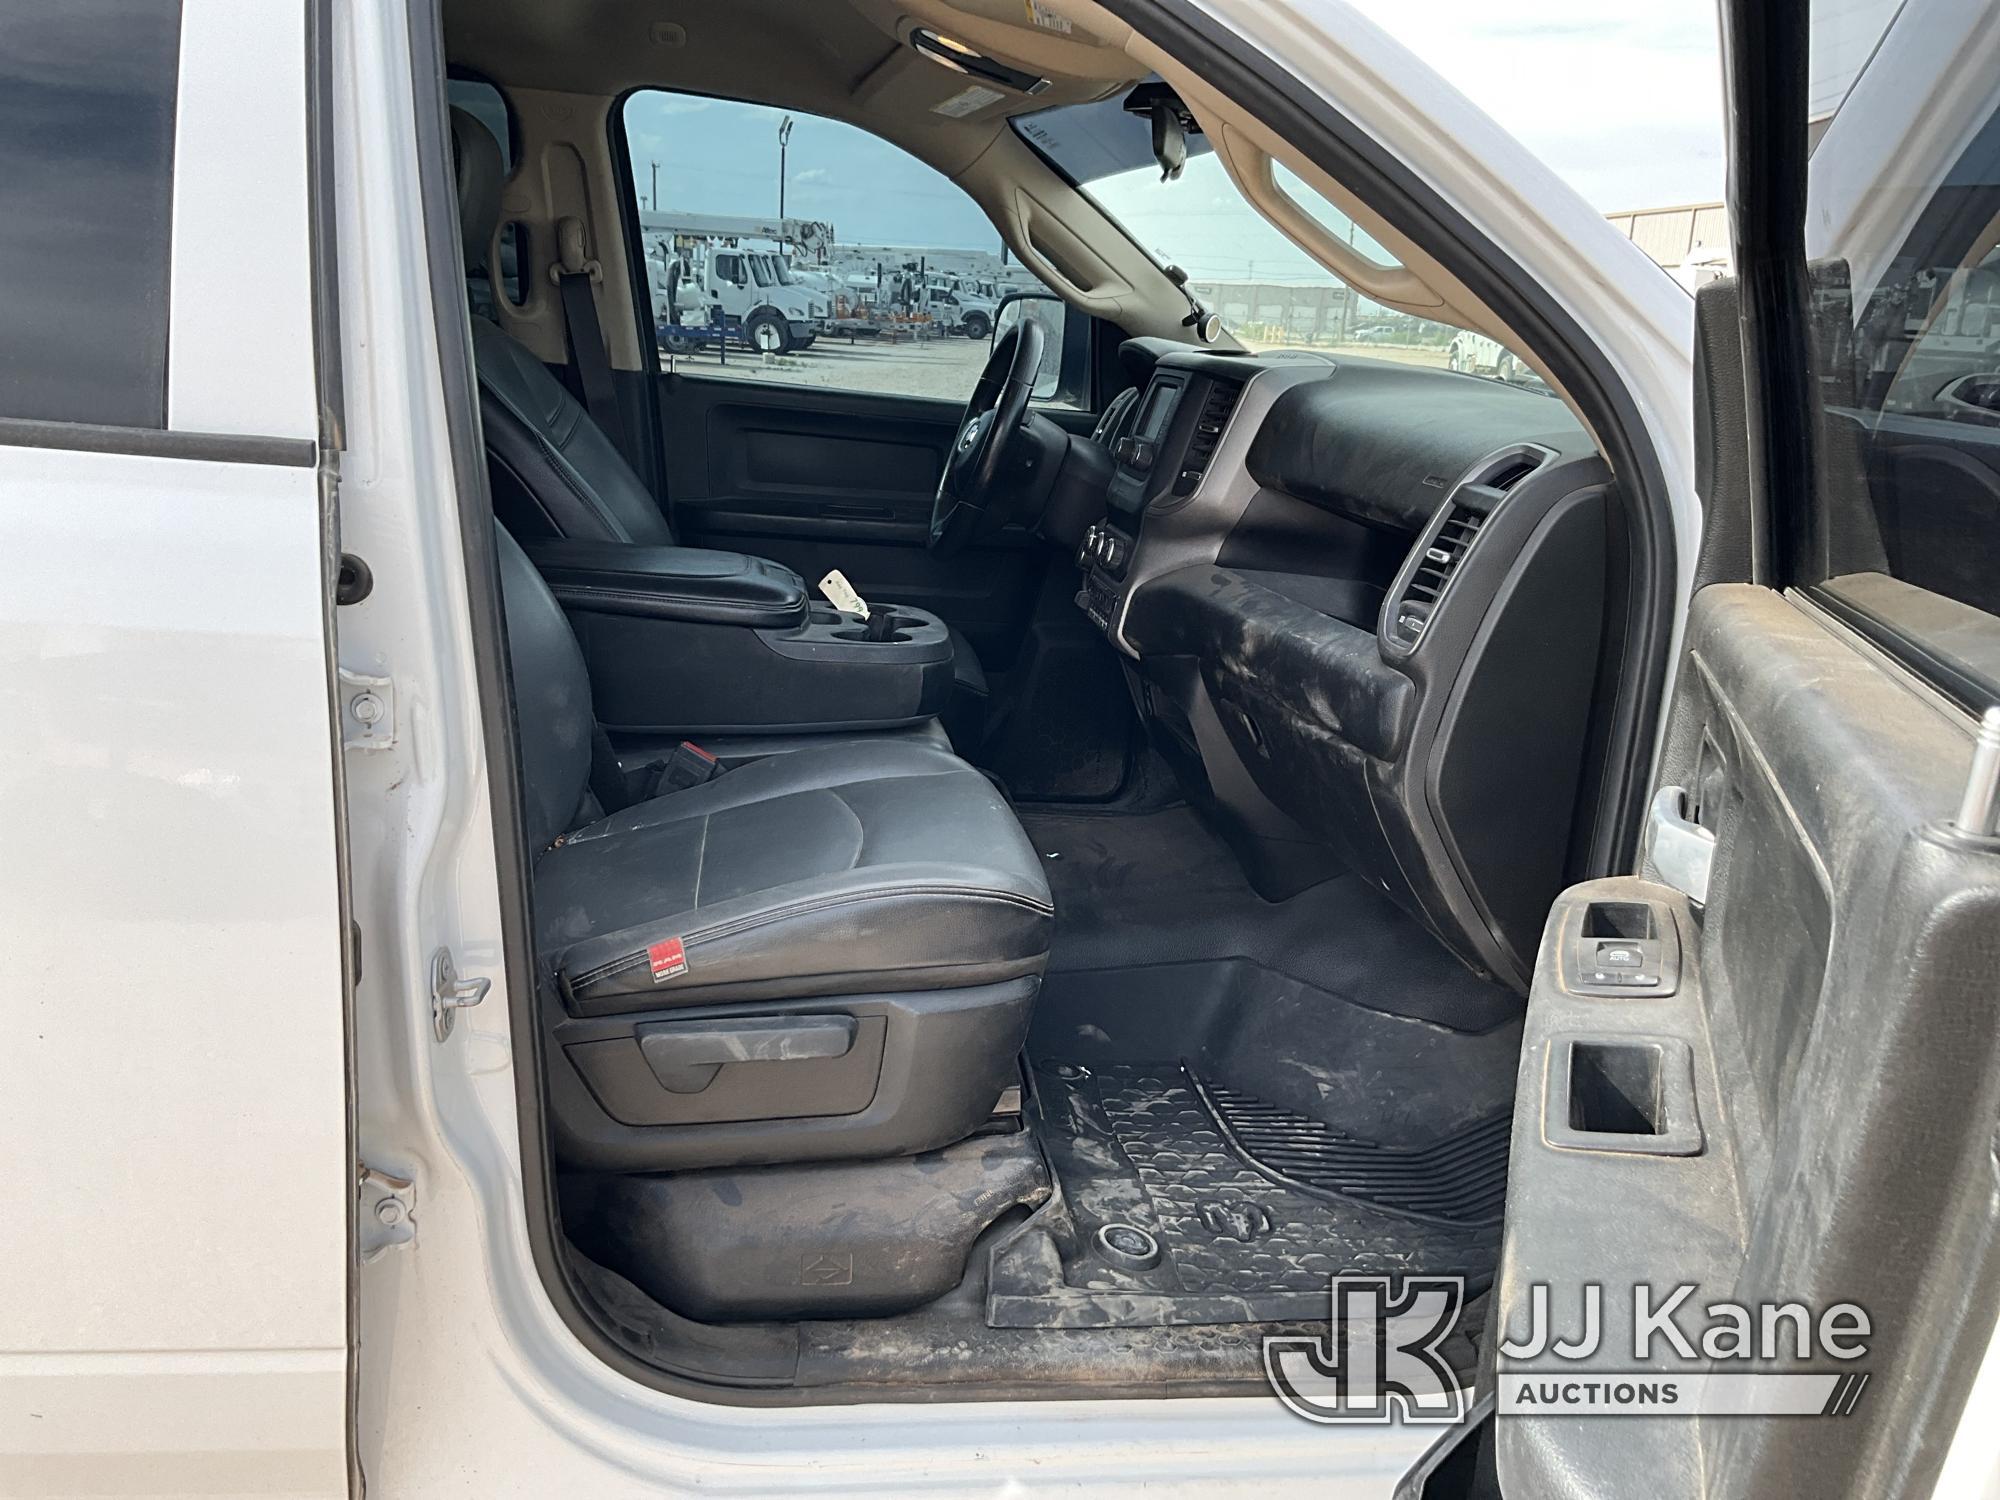 (Odessa, TX) 2019 RAM 2500 4x4 Crew-Cab Pickup Truck Runs & Moves) (Engine Tick, Check Engine Light